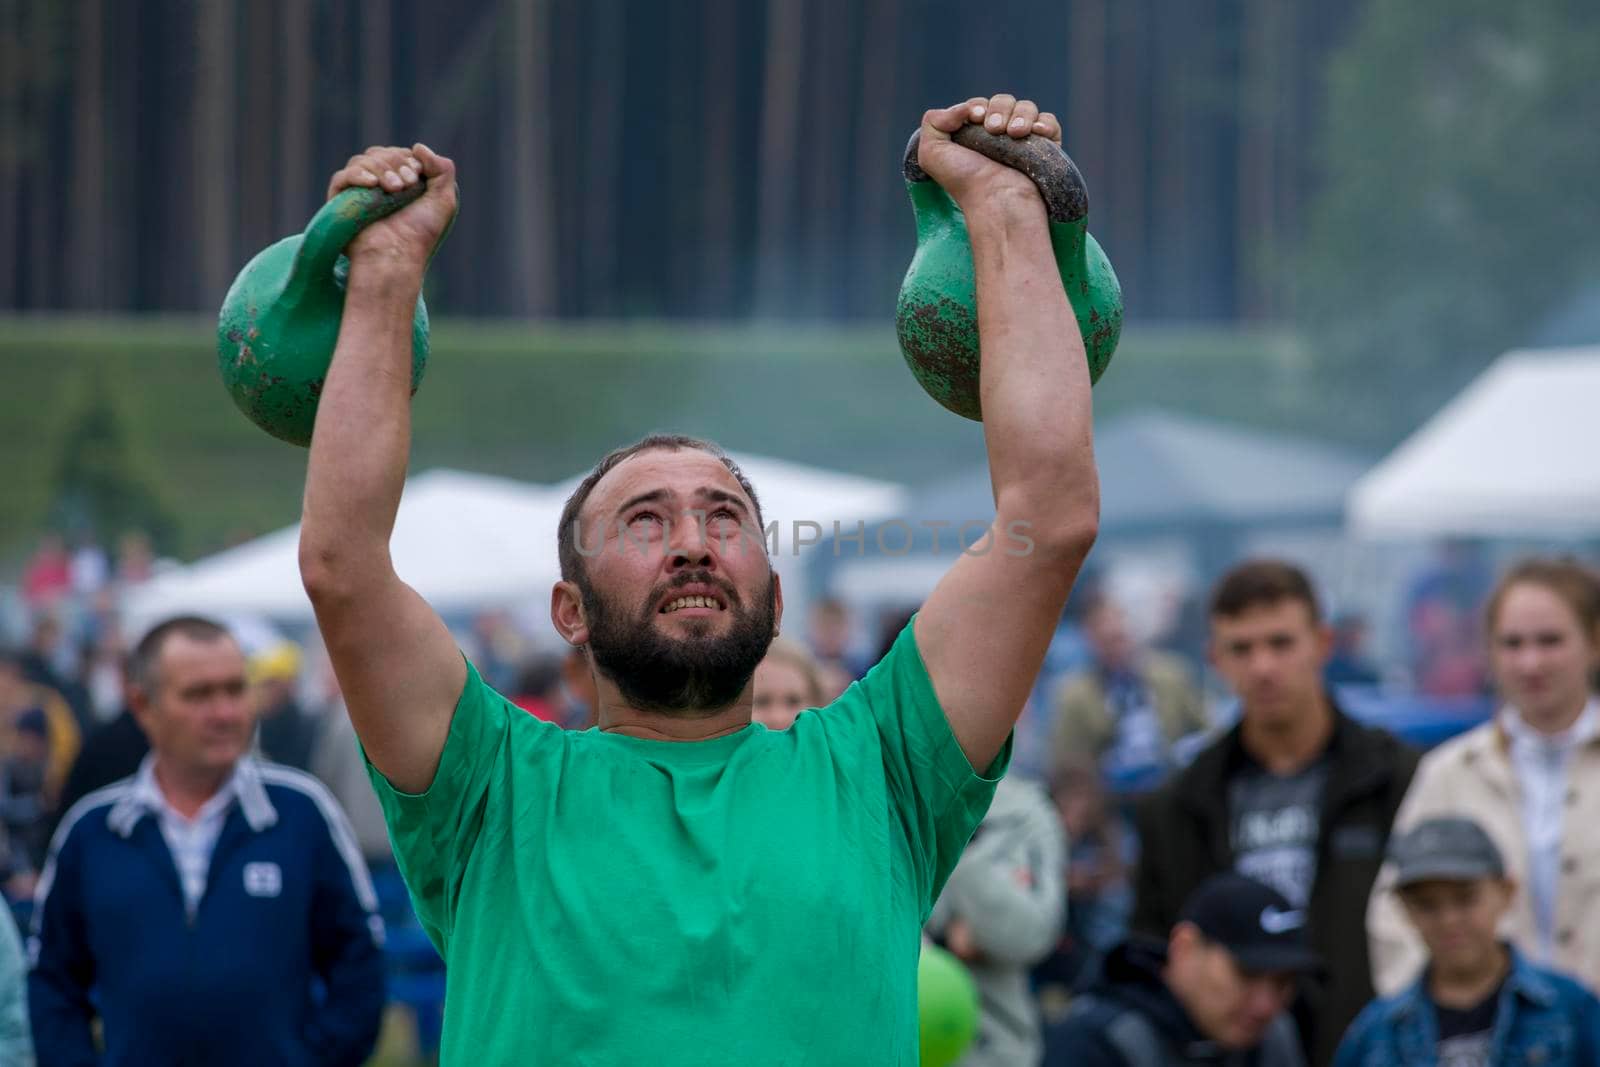 A man lifts a kettlebell sports equipment. Bashkortostan, Russia - 19 June, 2022. by Essffes